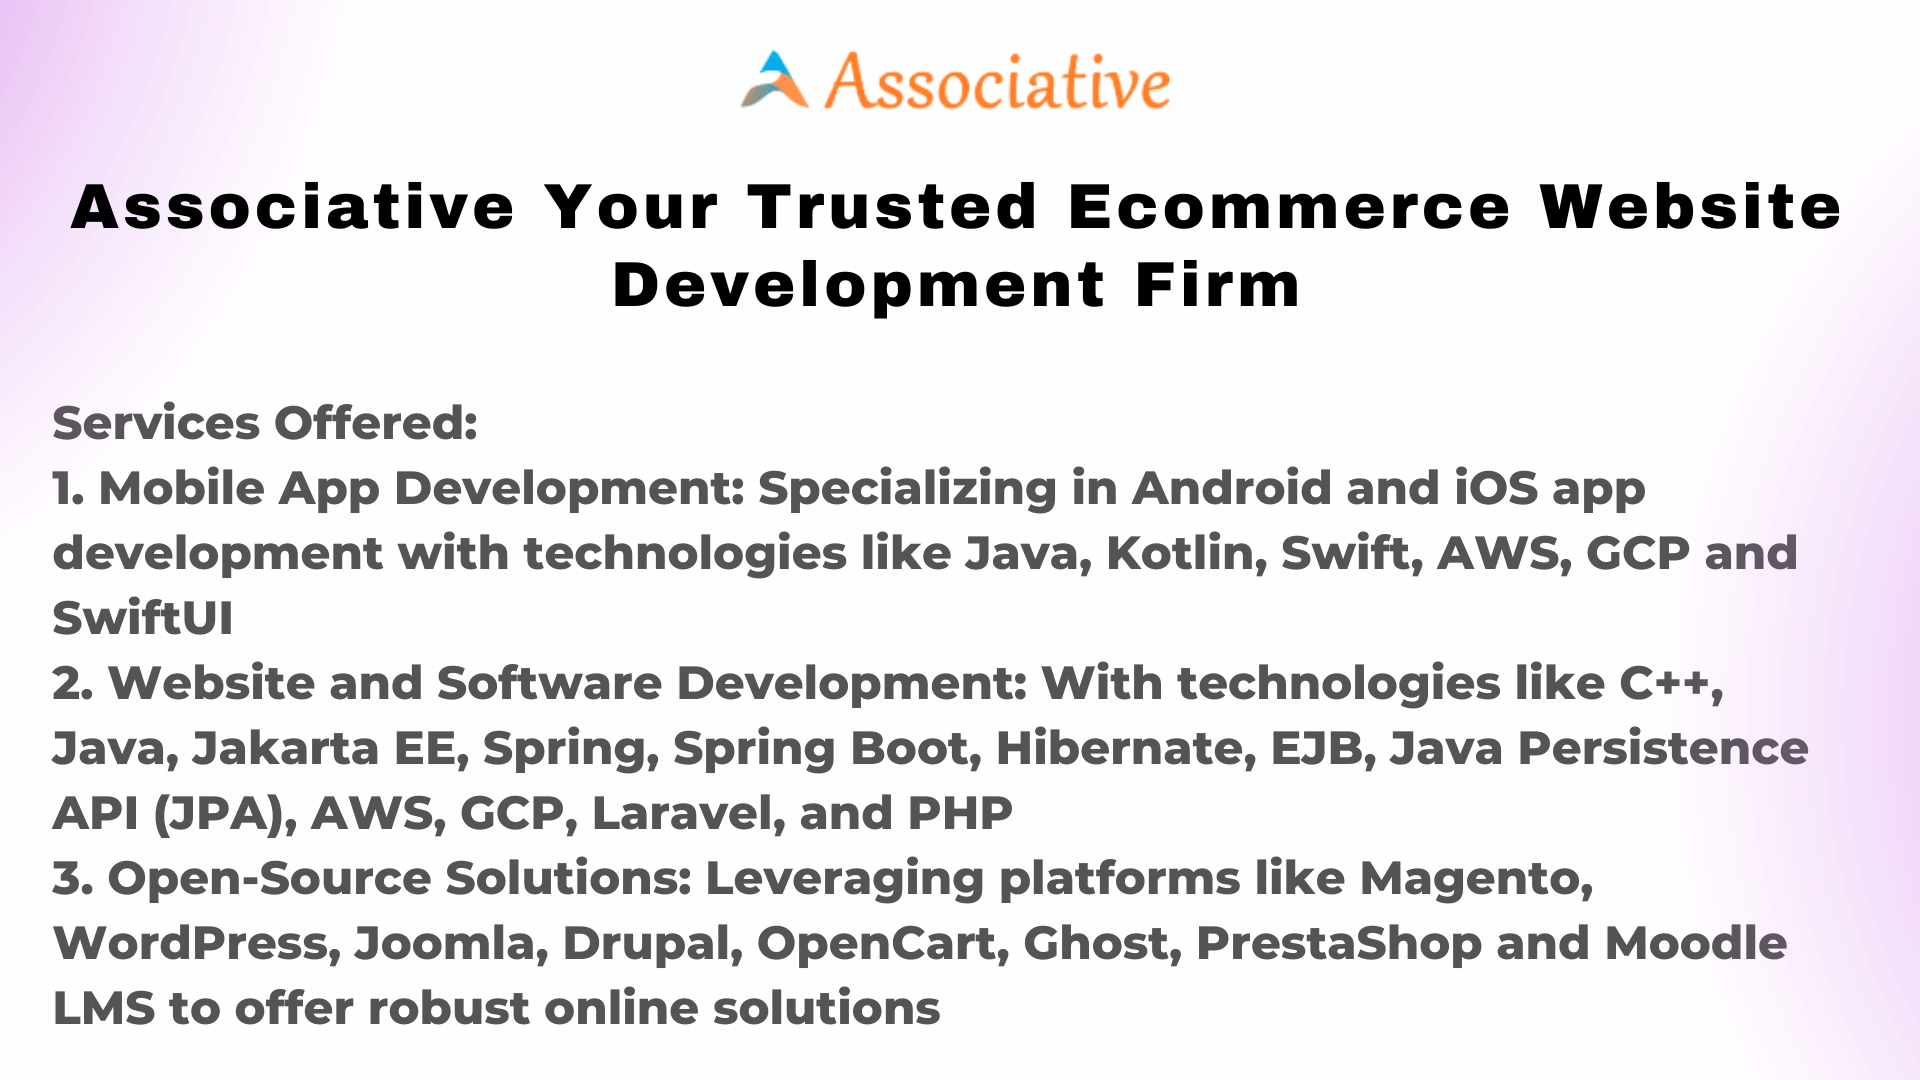 Associative Your Trusted Ecommerce Website Development Firm